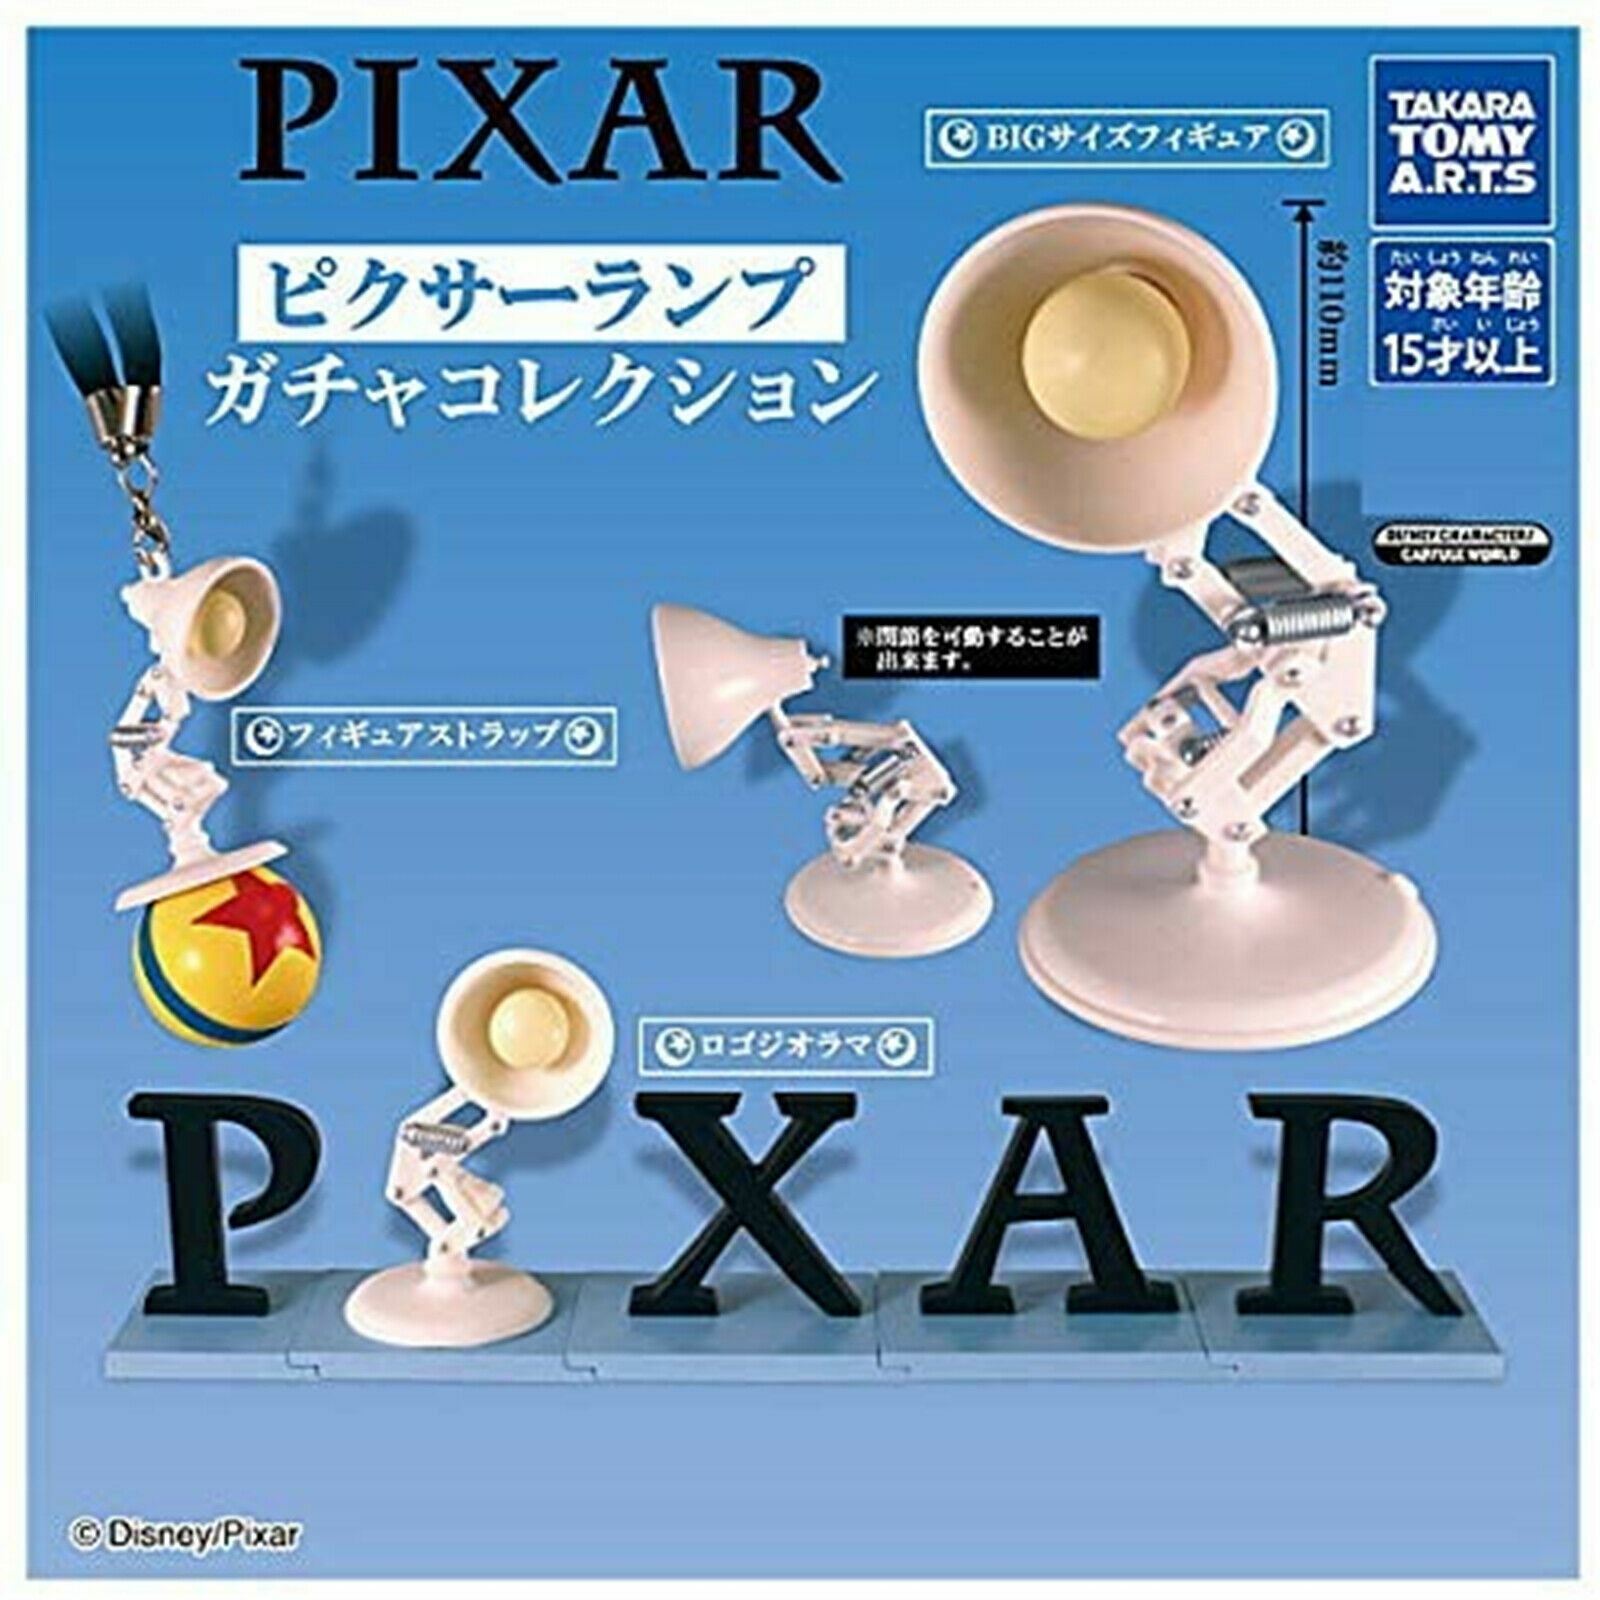 PIXAR Pixar Lamp Gacha Collection / Set of 3 (Full Set) Capsule Toys